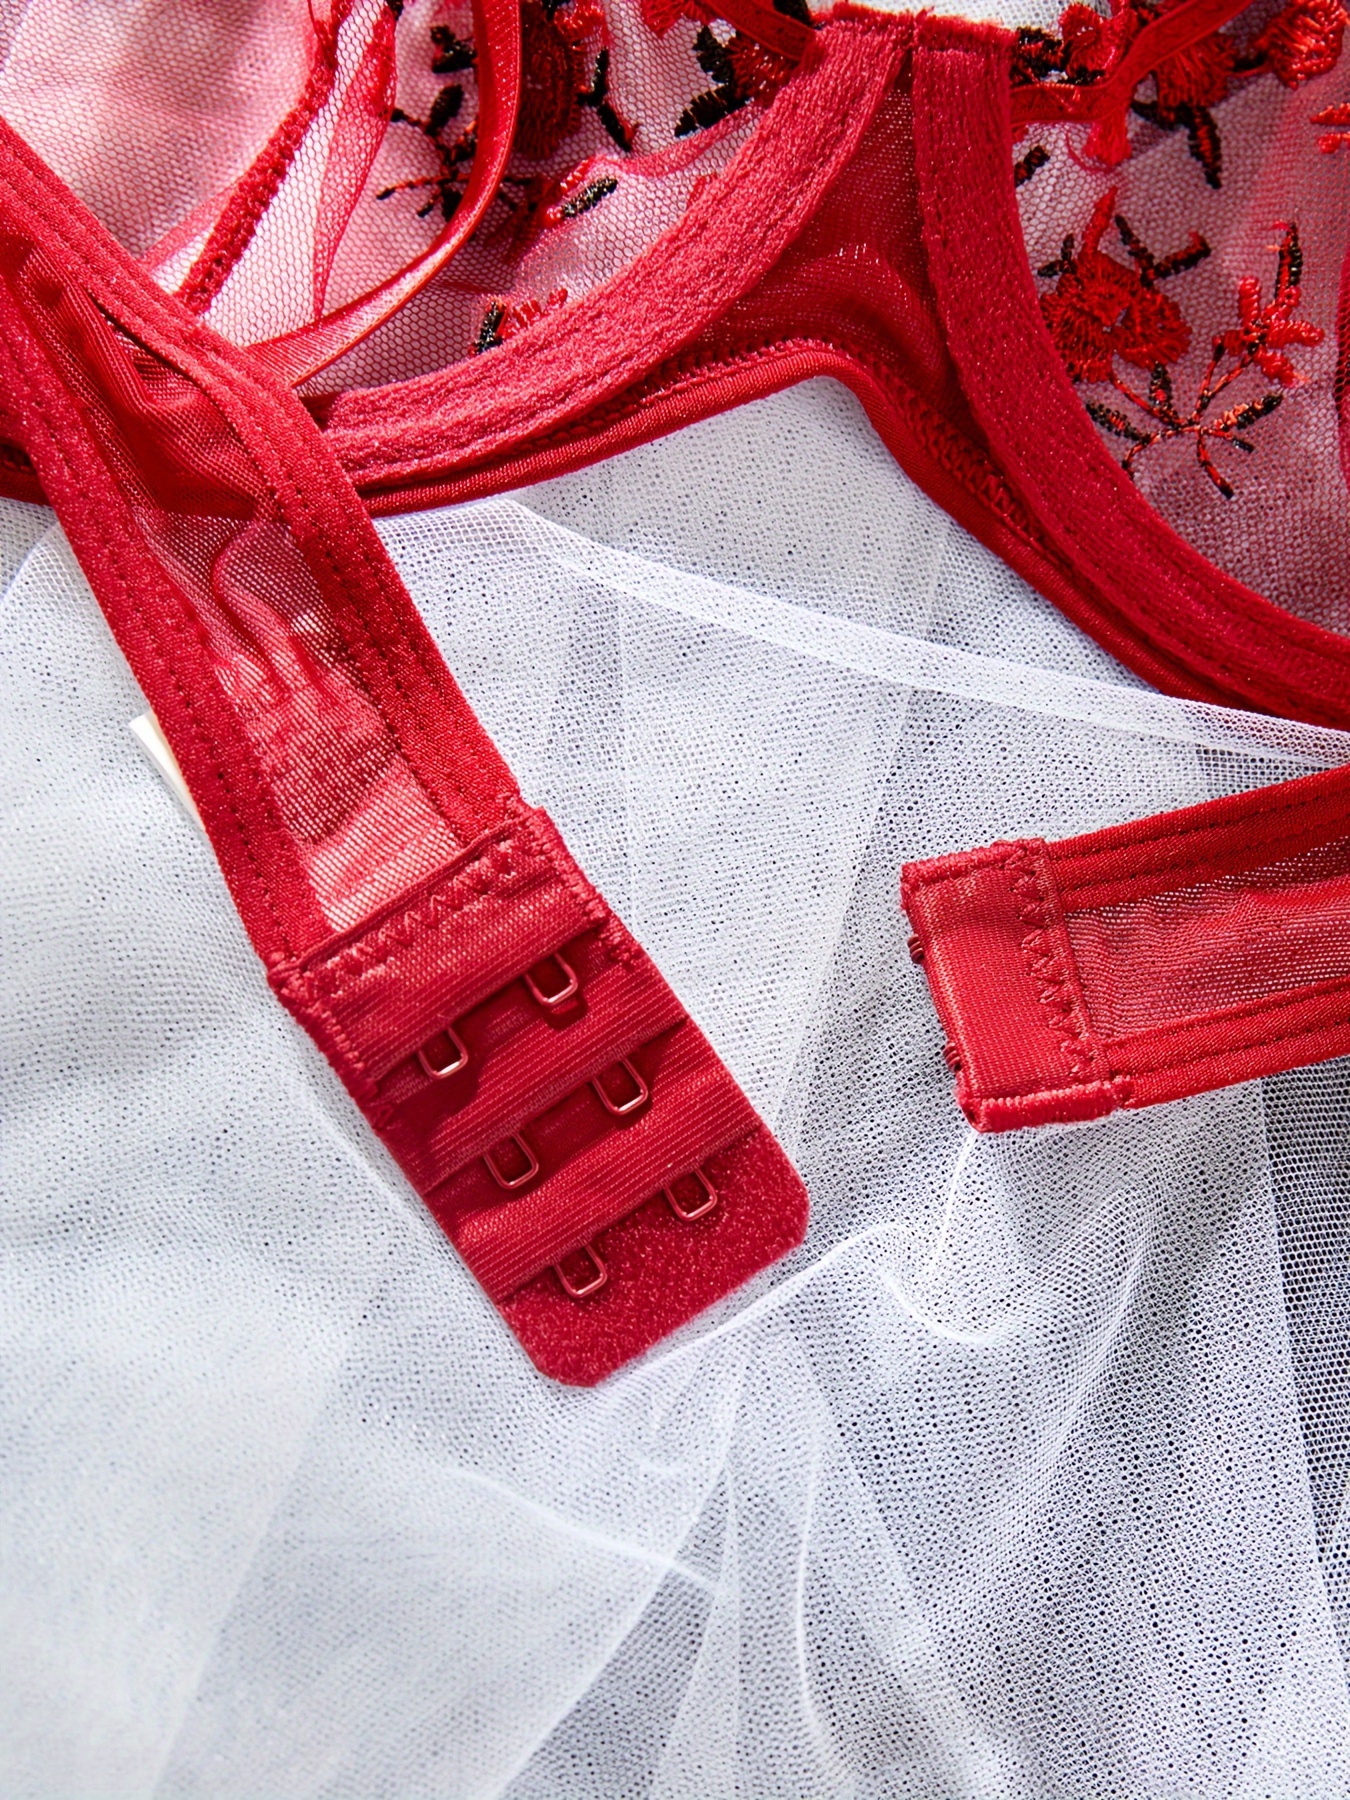 New Big Size Women Bra Underwear Underwire Push Up Strappy Embroidered Mesh  Sheer Lingerie Set For Women